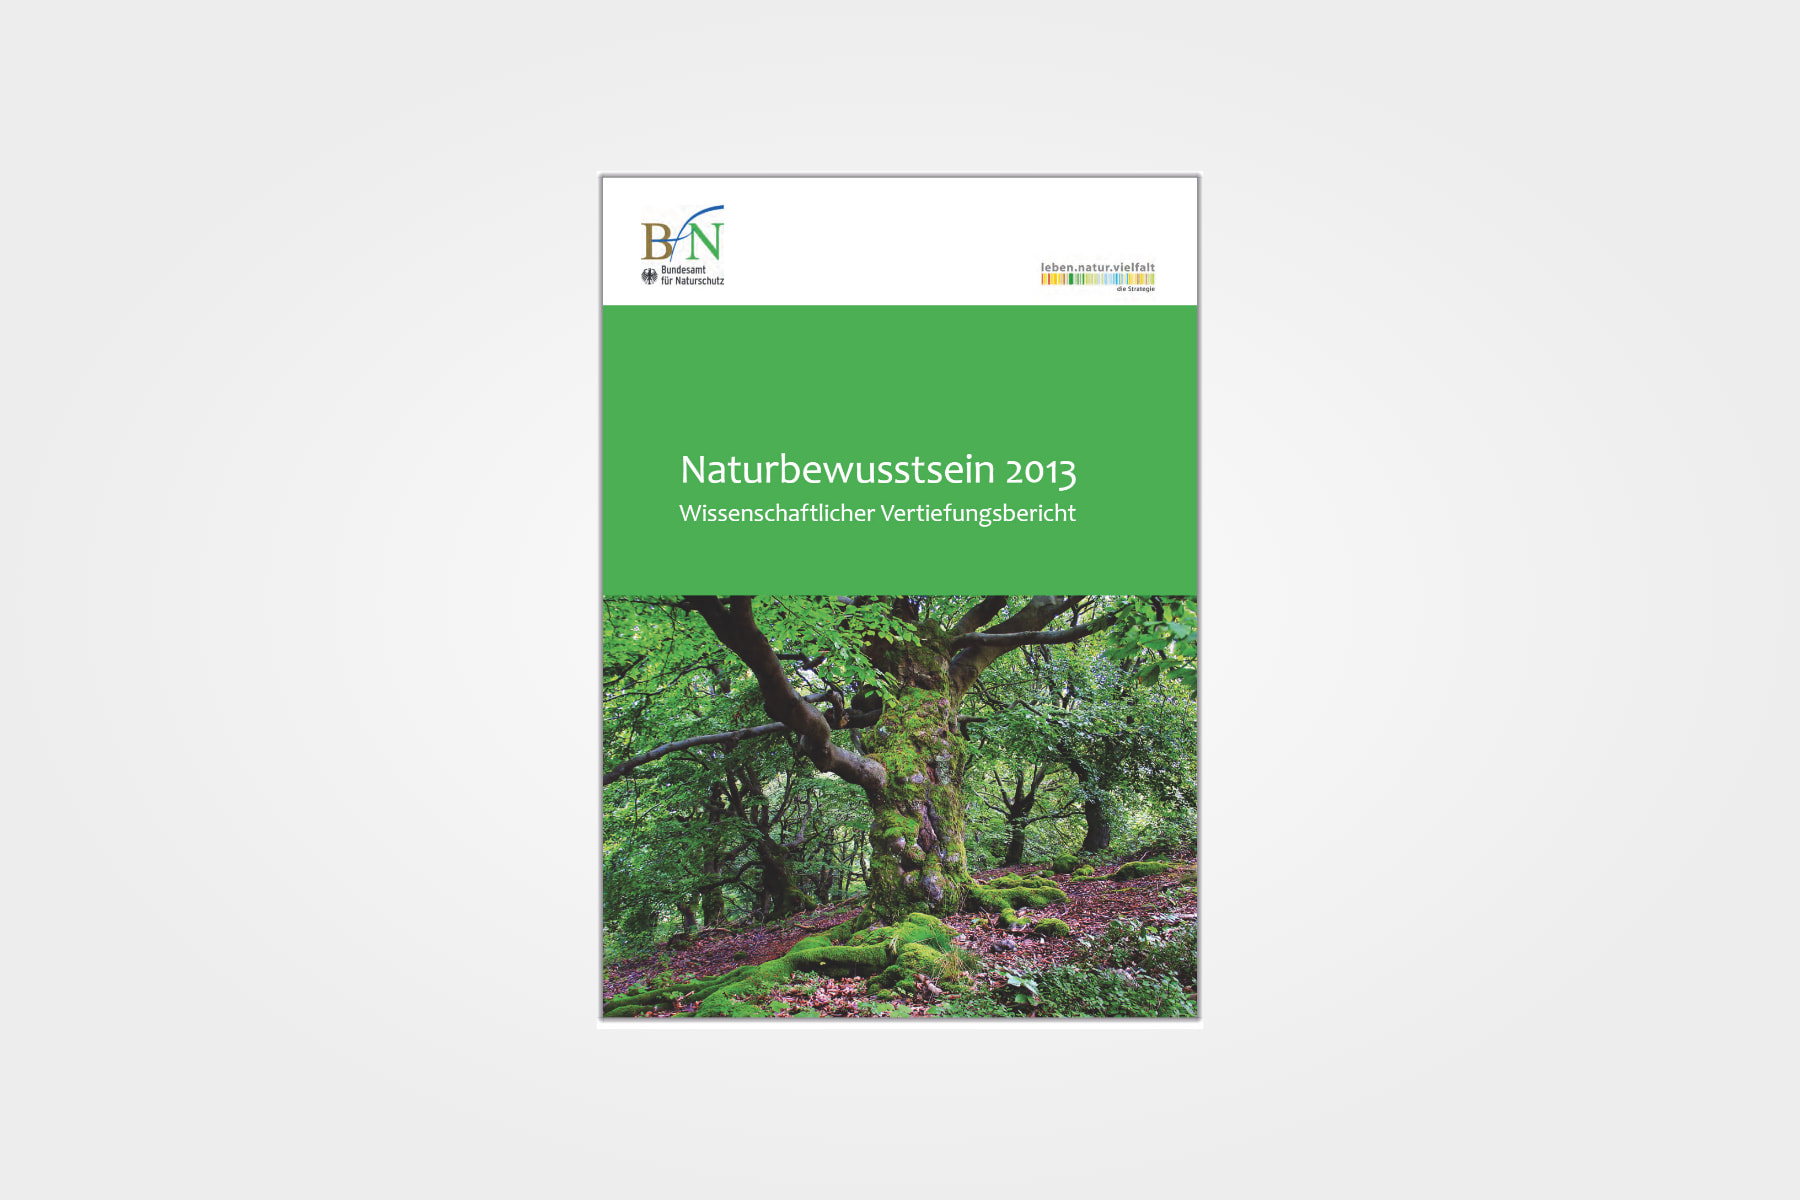 Nature awareness 2015 – in-depth scientific report